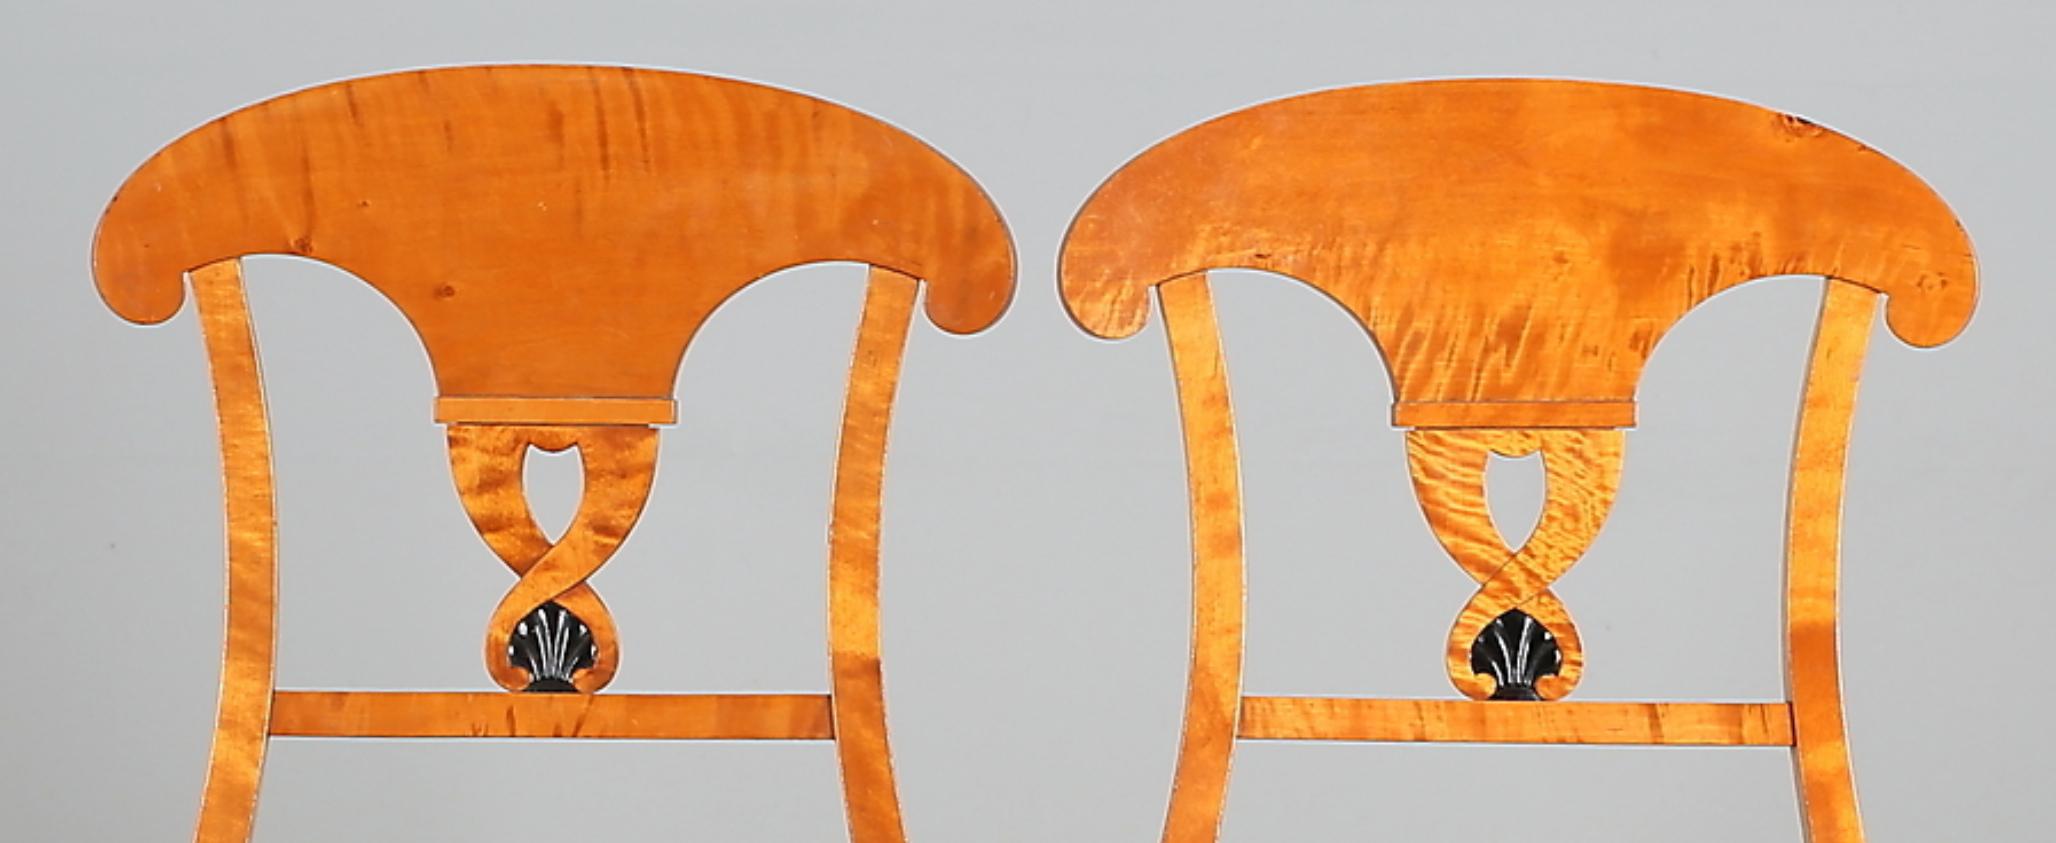 Ebonized Swedish Biedermeier Empire Roundel Dining Chairs, 19th Century Ormolu Style Pair